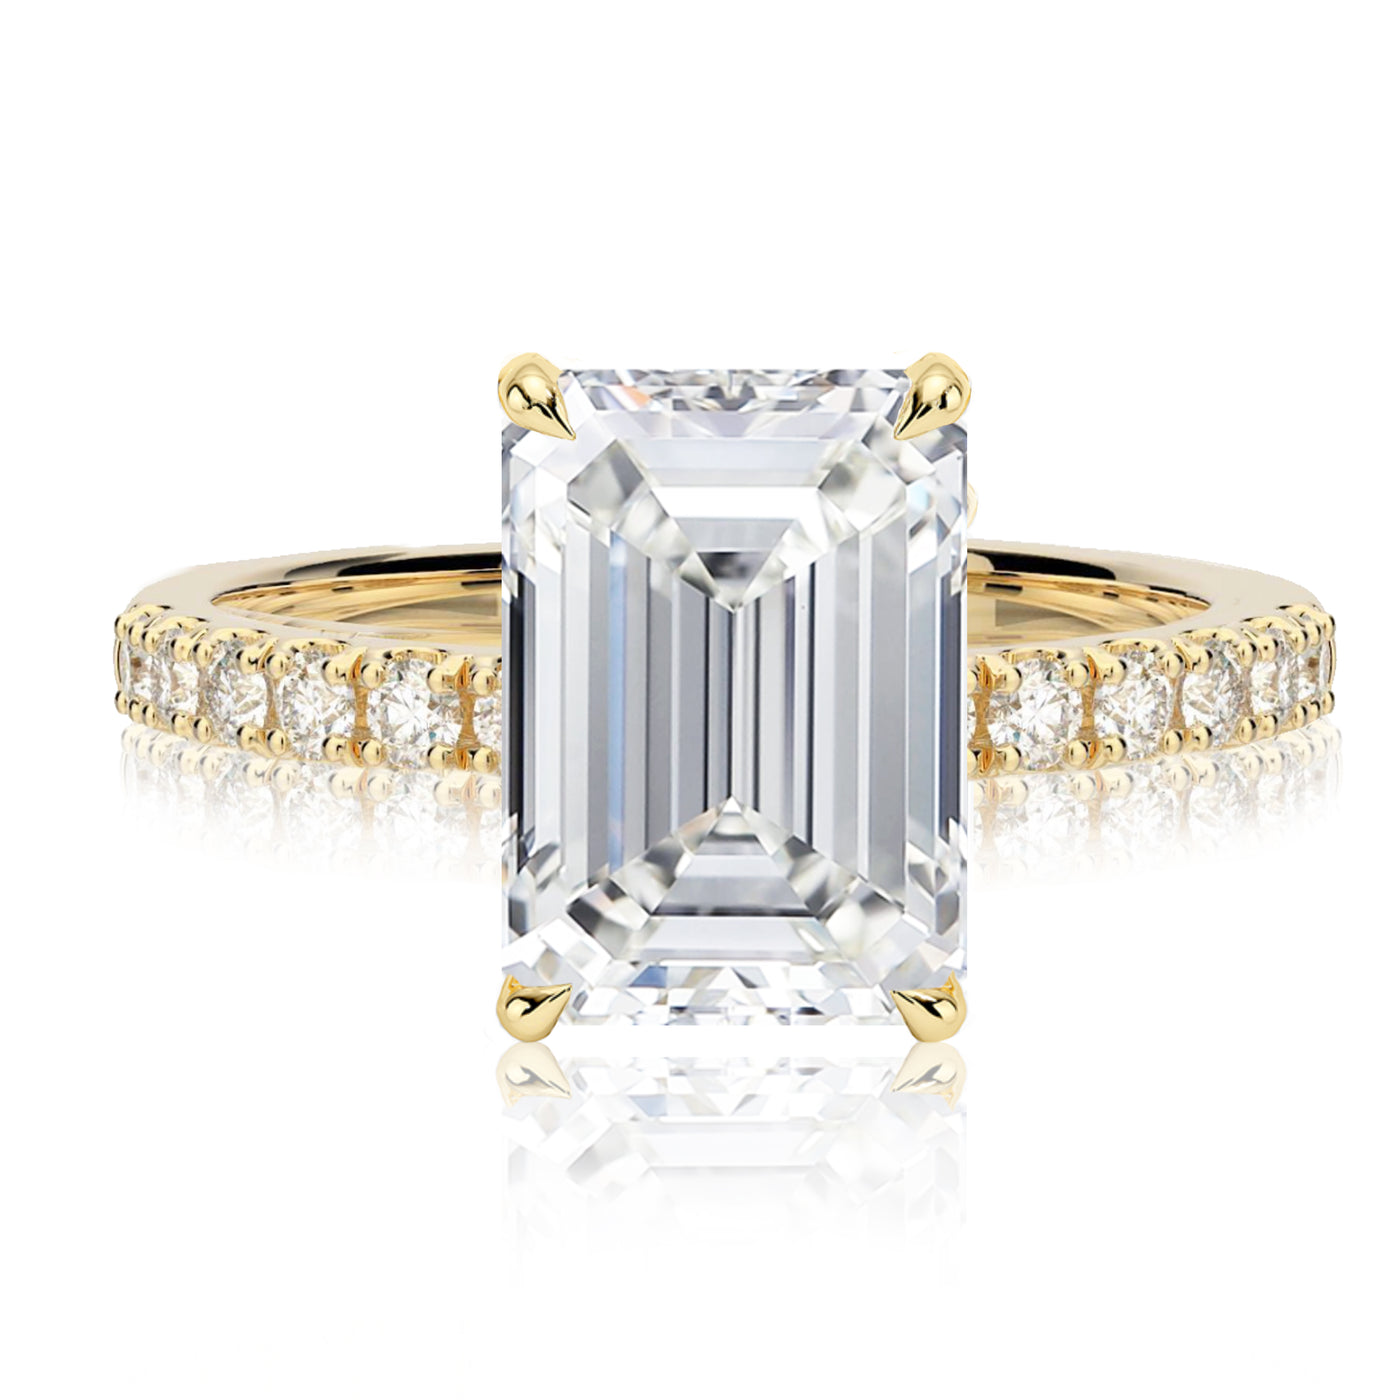 18K White Gold Emerald Cut Diamond Hidden Halo Pave' Engagement Ring